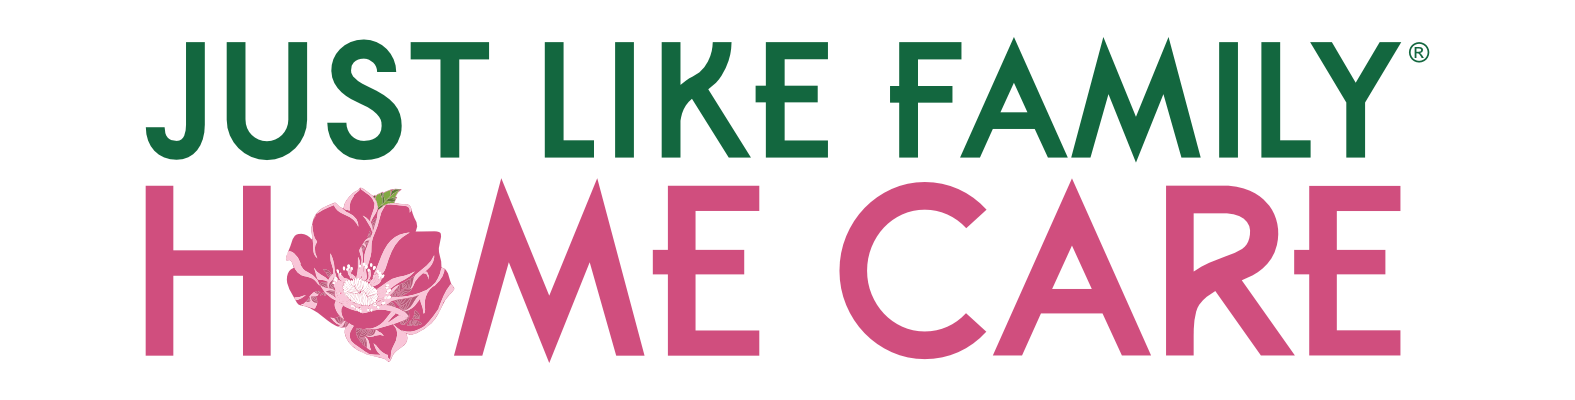 jlf-logo-vector-NEW-green-pink-transparent-bg-1 (1).png